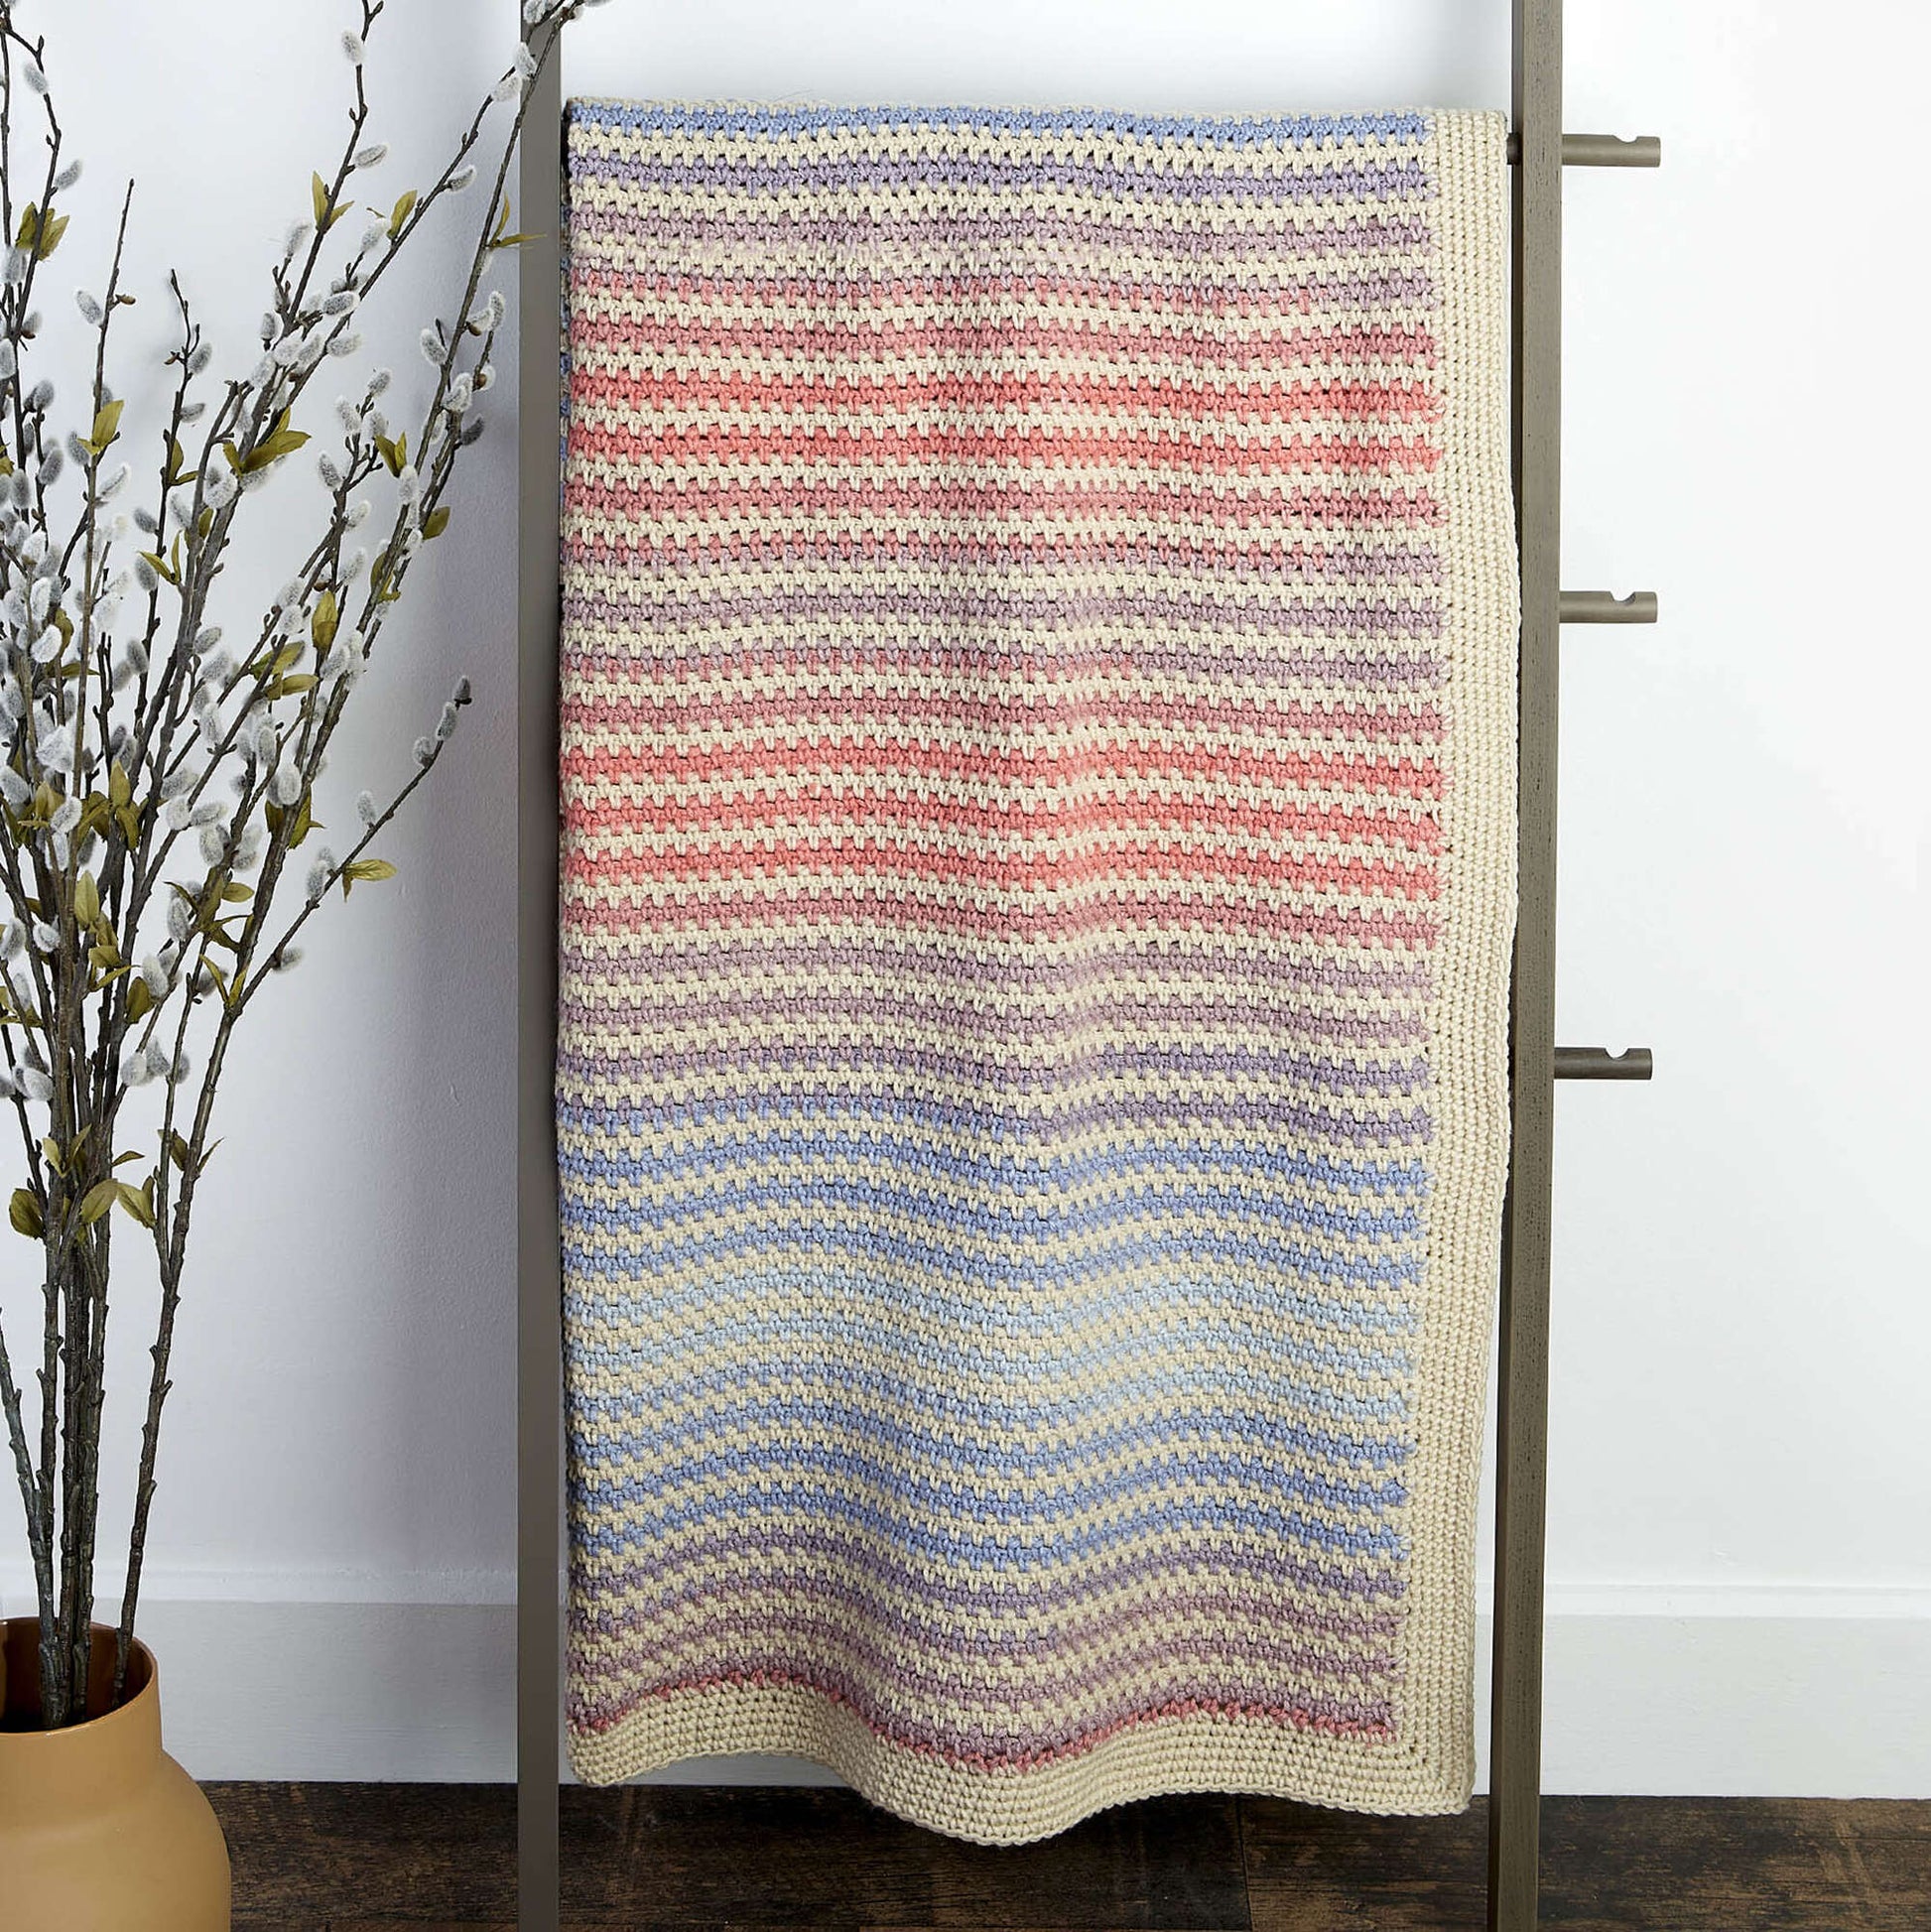 Free Caron Crochet Moss Stitch Ombré Blanket Pattern